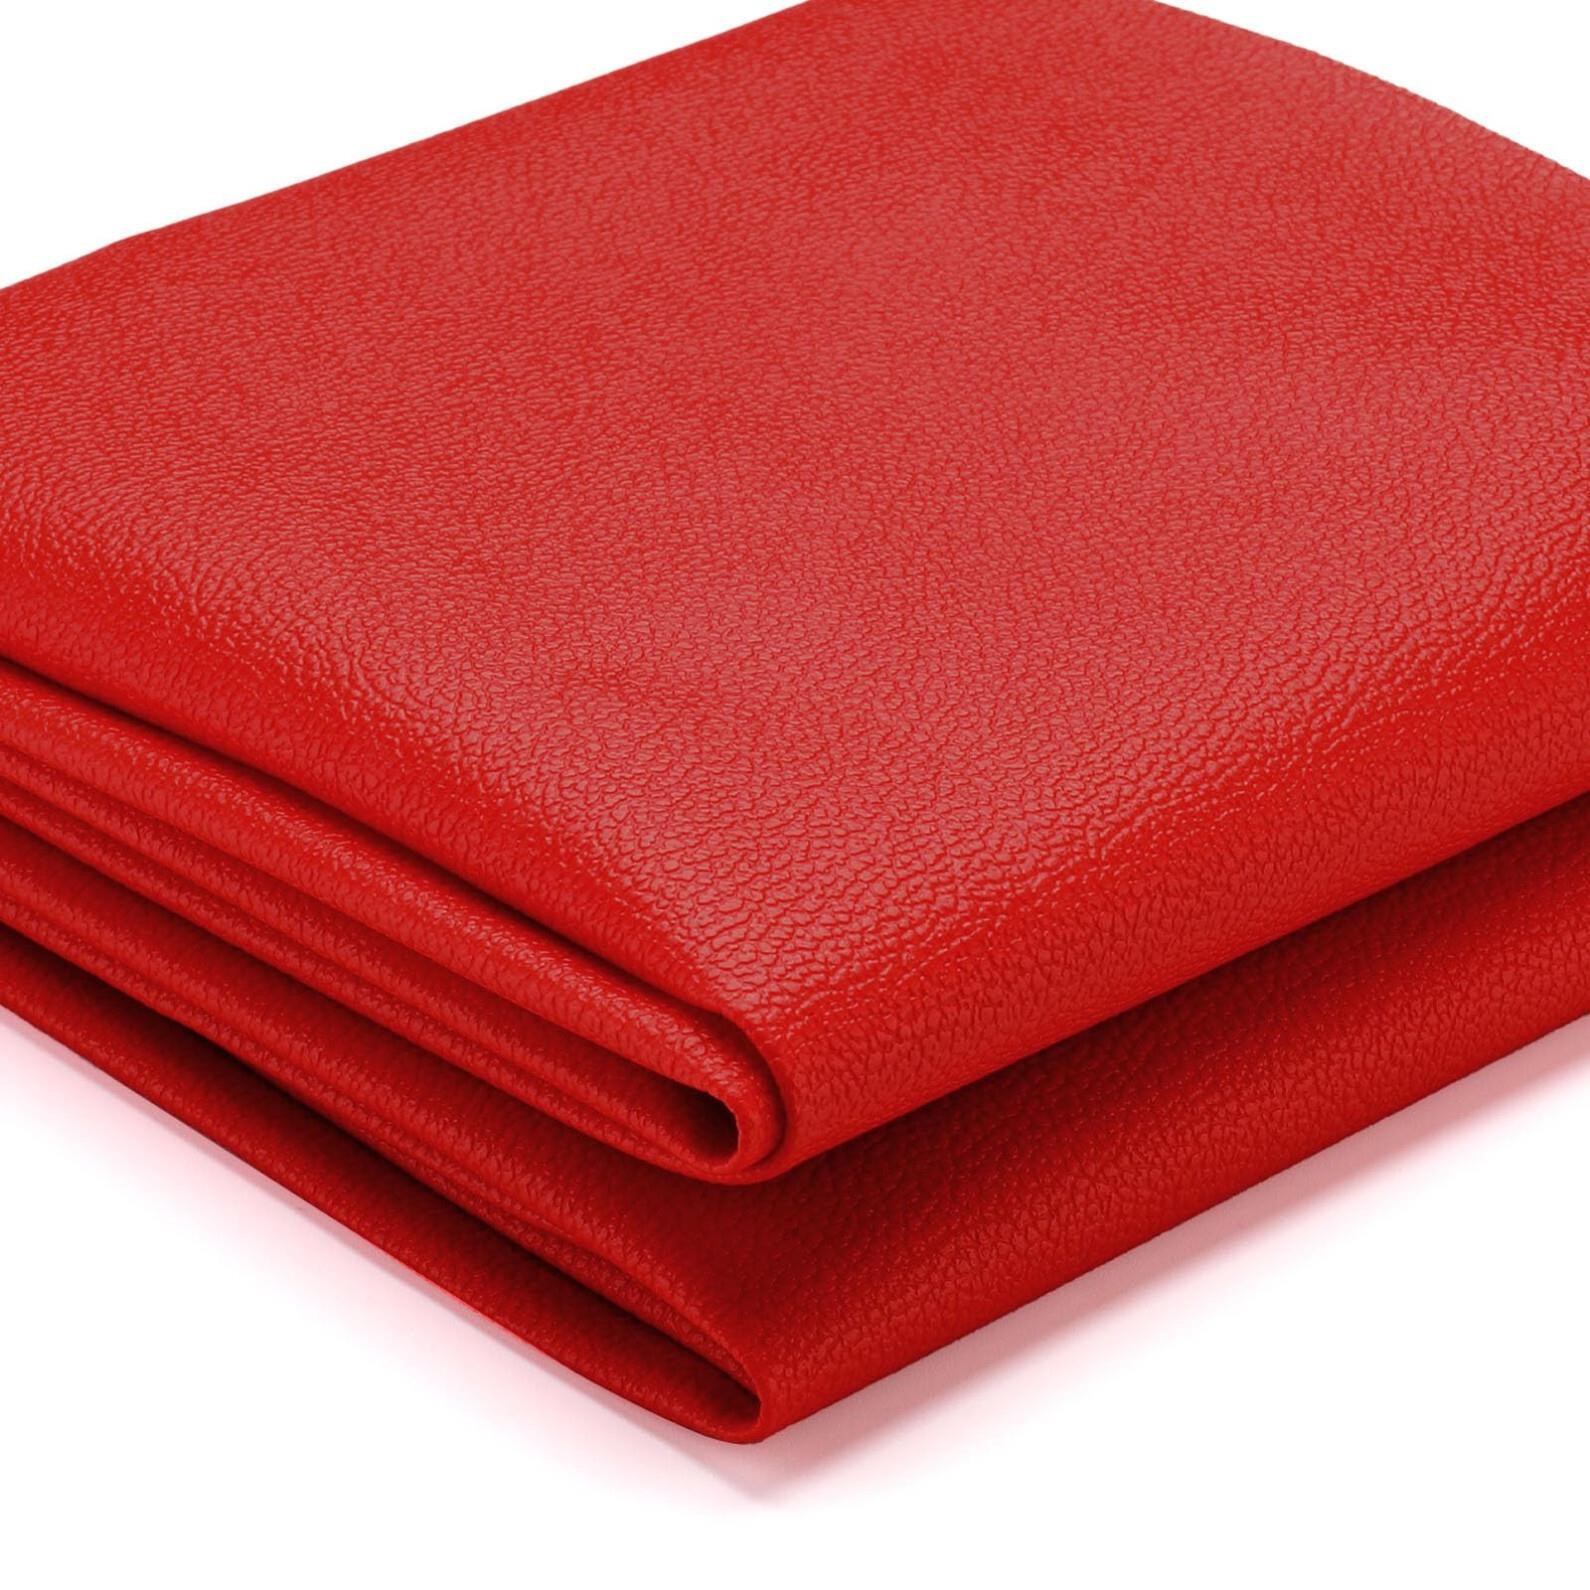 K-Musculo Vinyl Fabric, Marine Faux Leather Uphols